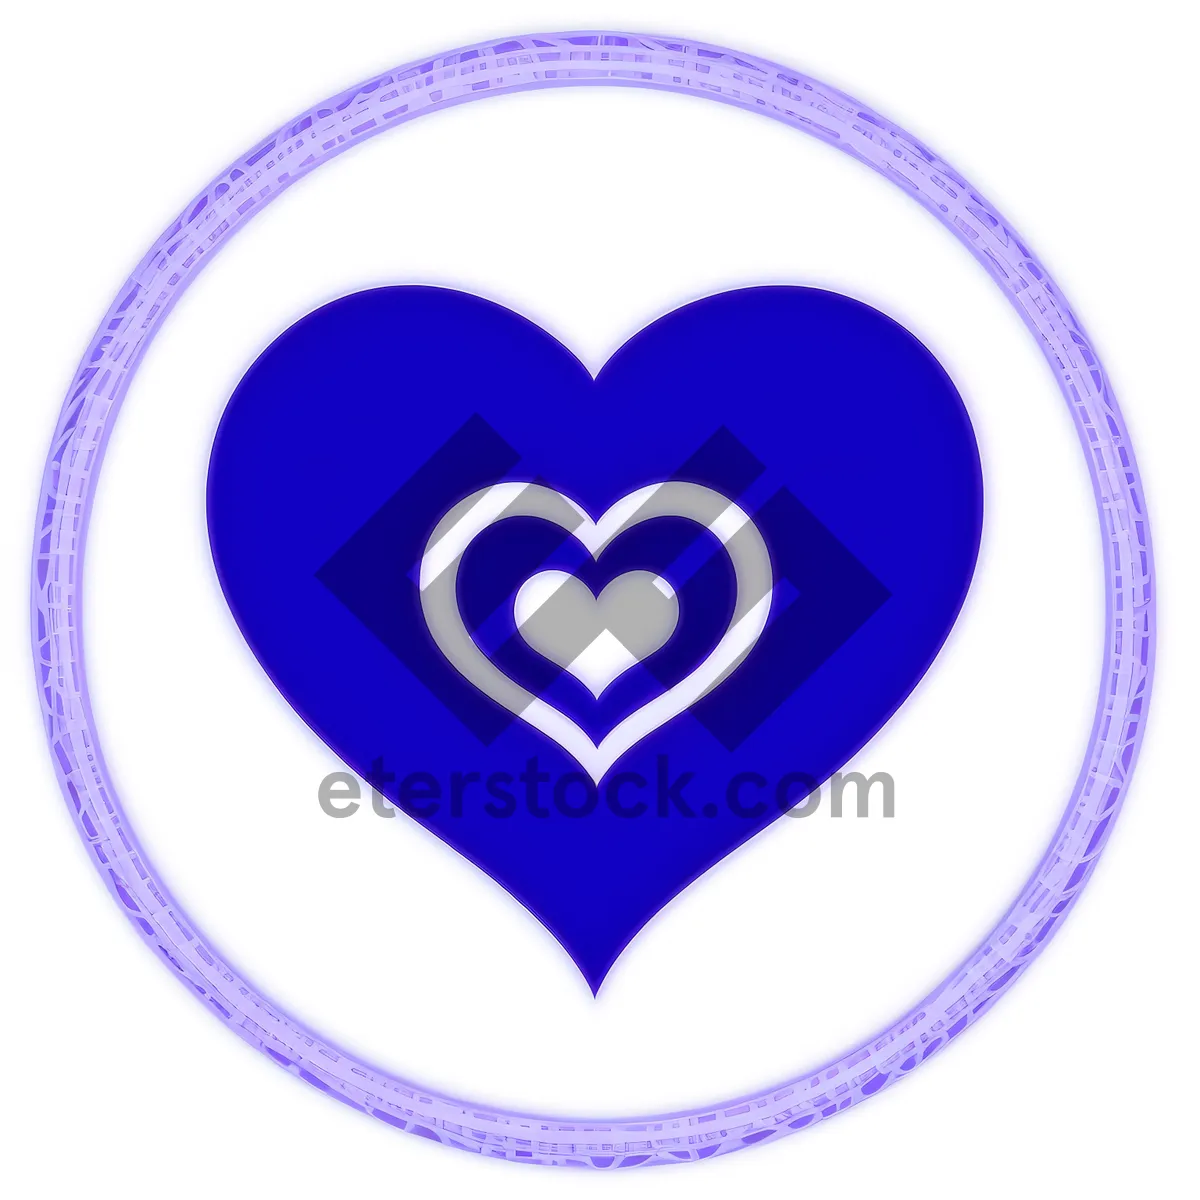 Picture of Heart-shaped Love Symbol - Romantic Graphic Design